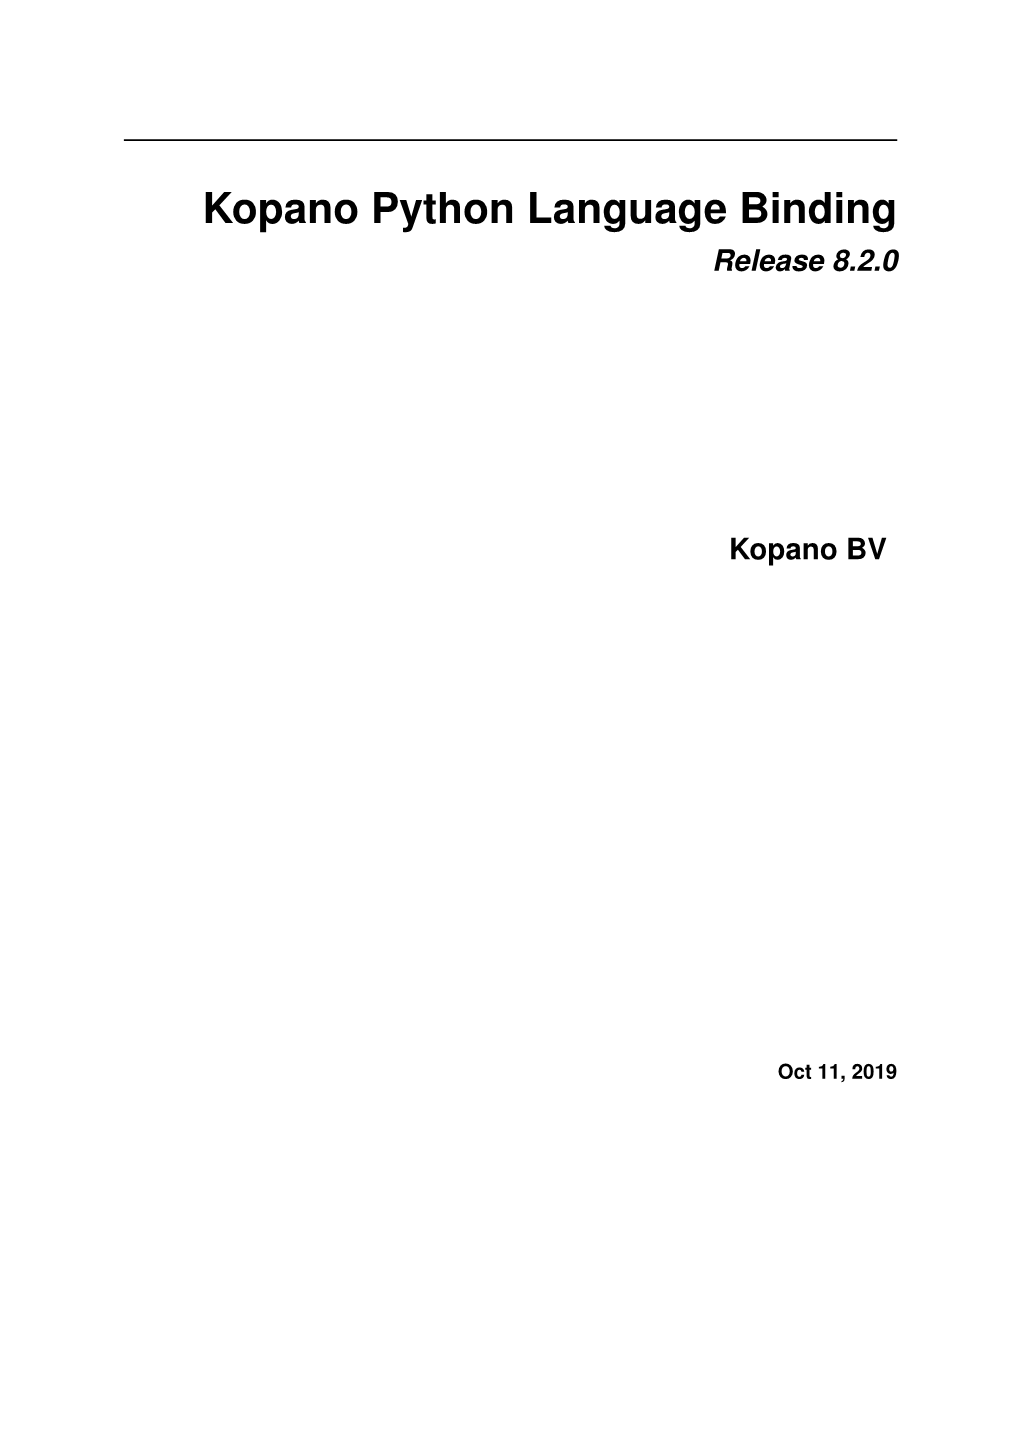 Kopano Python Language Binding Release 8.2.0